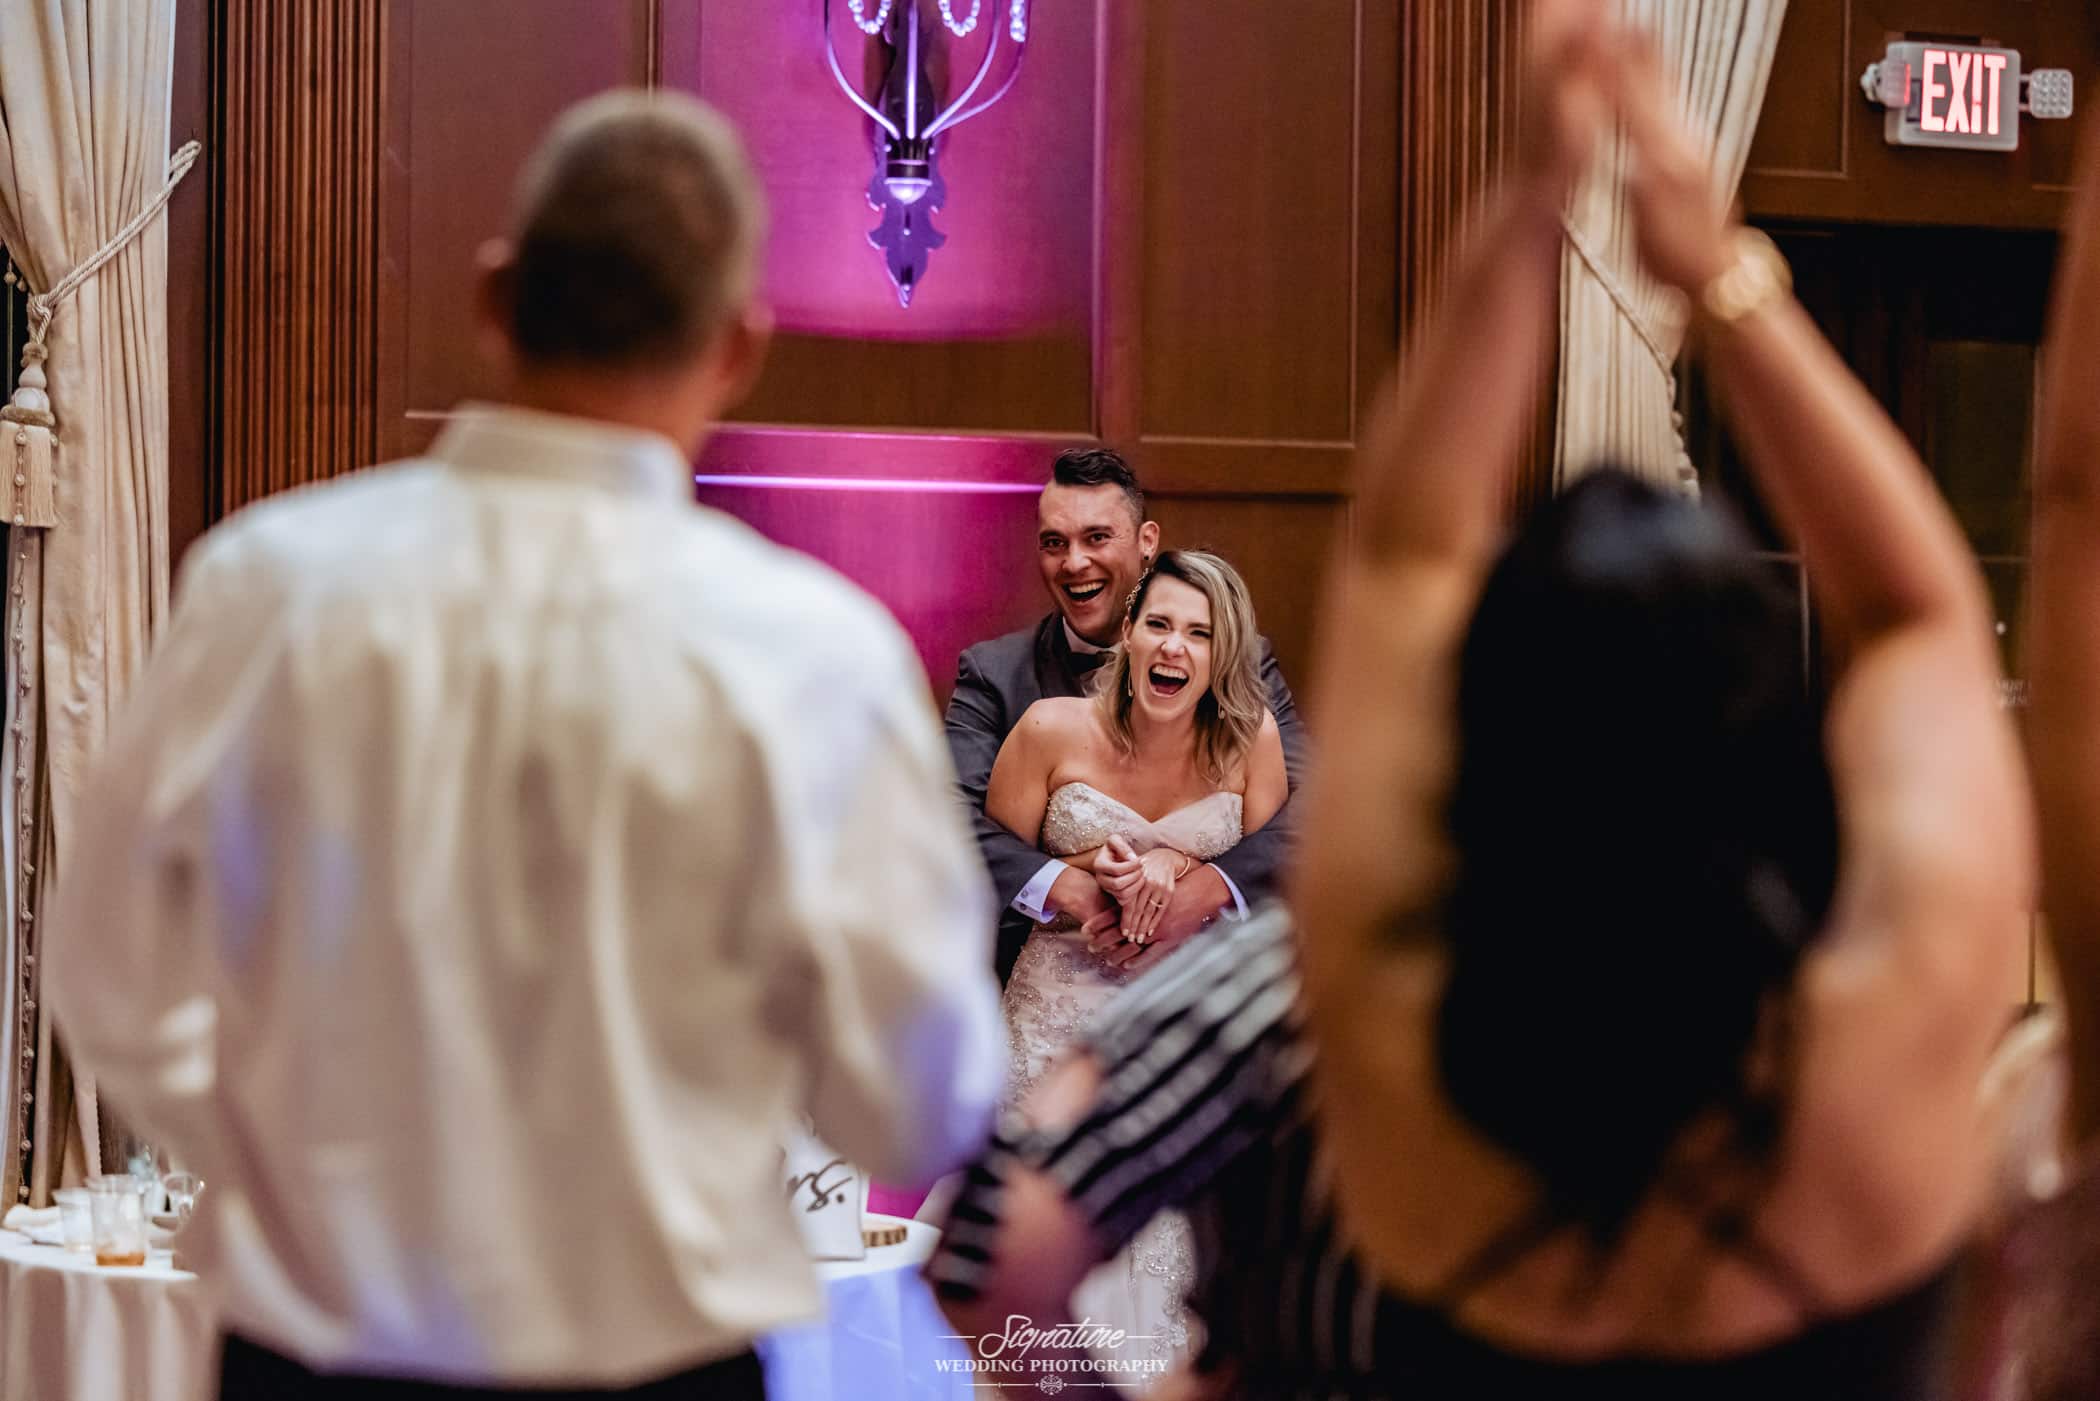 Groom hugging bride from behind at reception